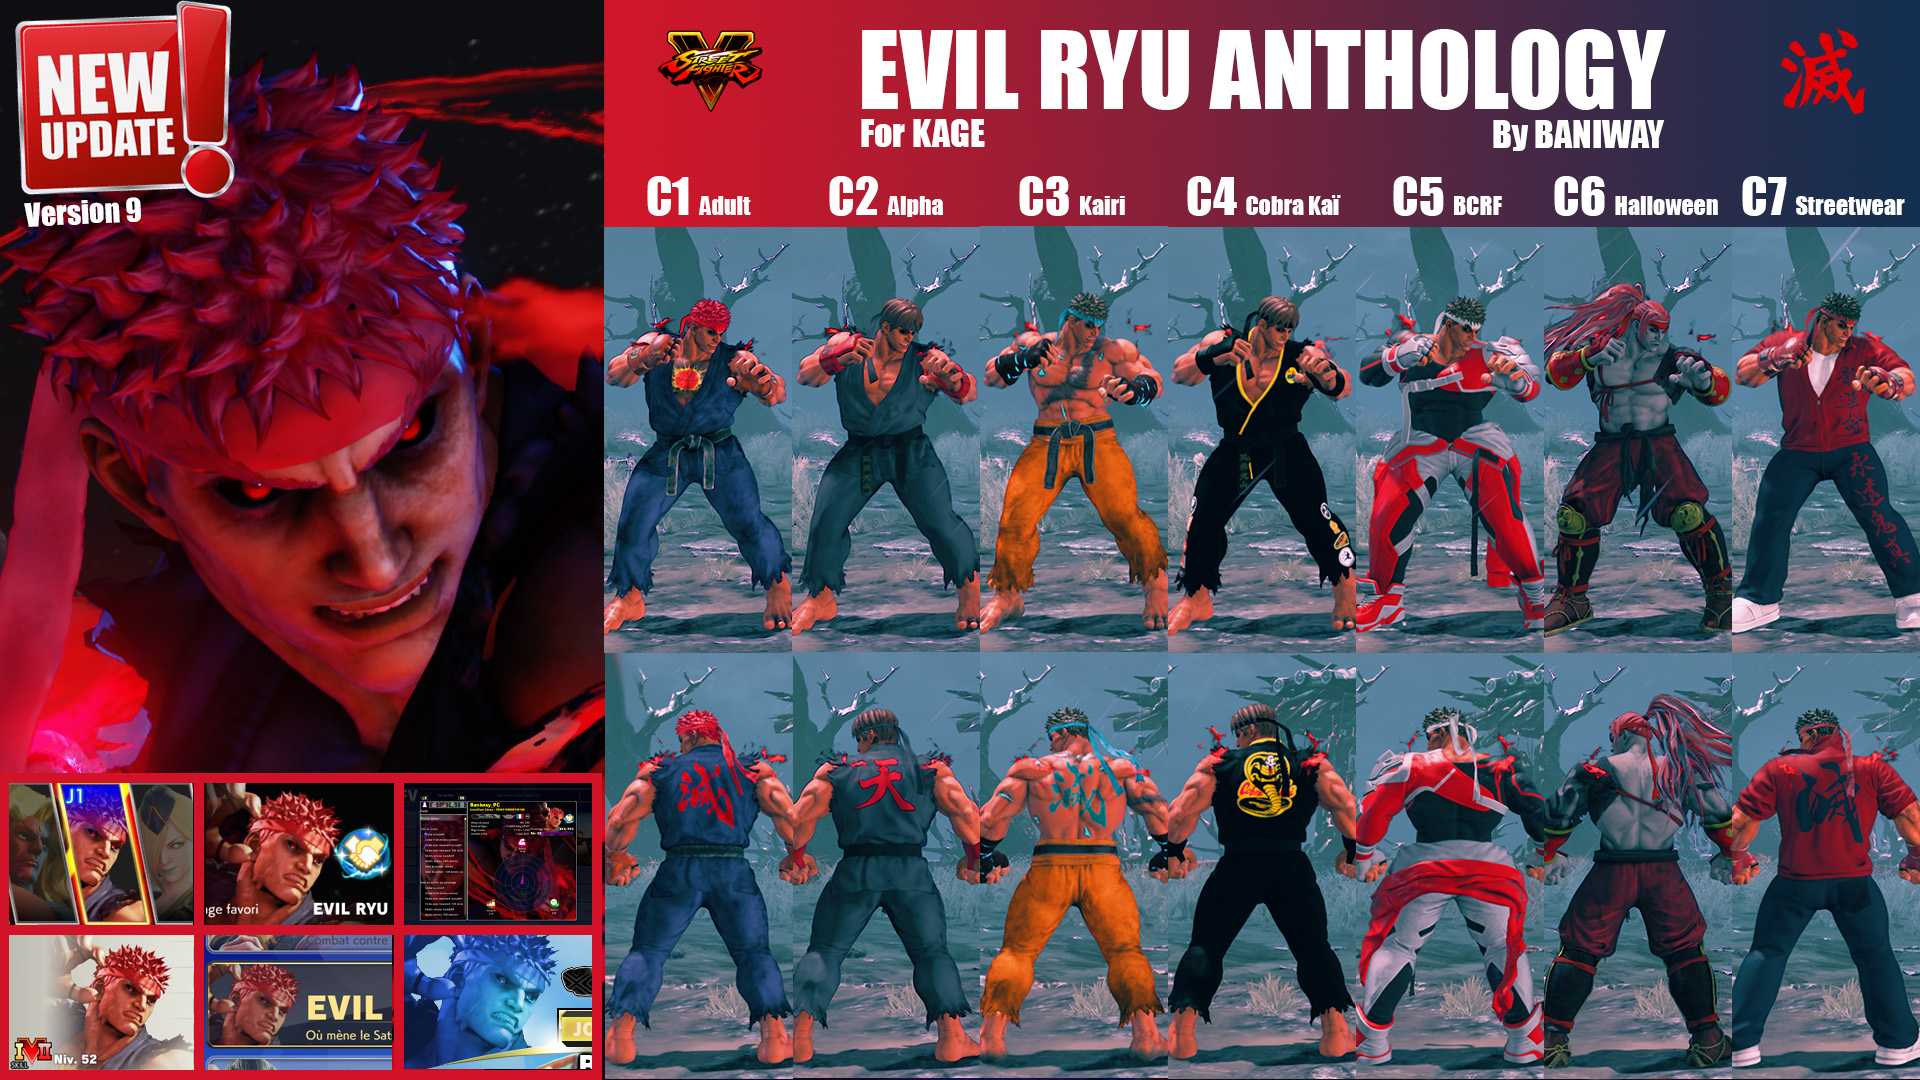 USFIV Street Fighter 1 Ryu by monkeygigabuster on DeviantArt